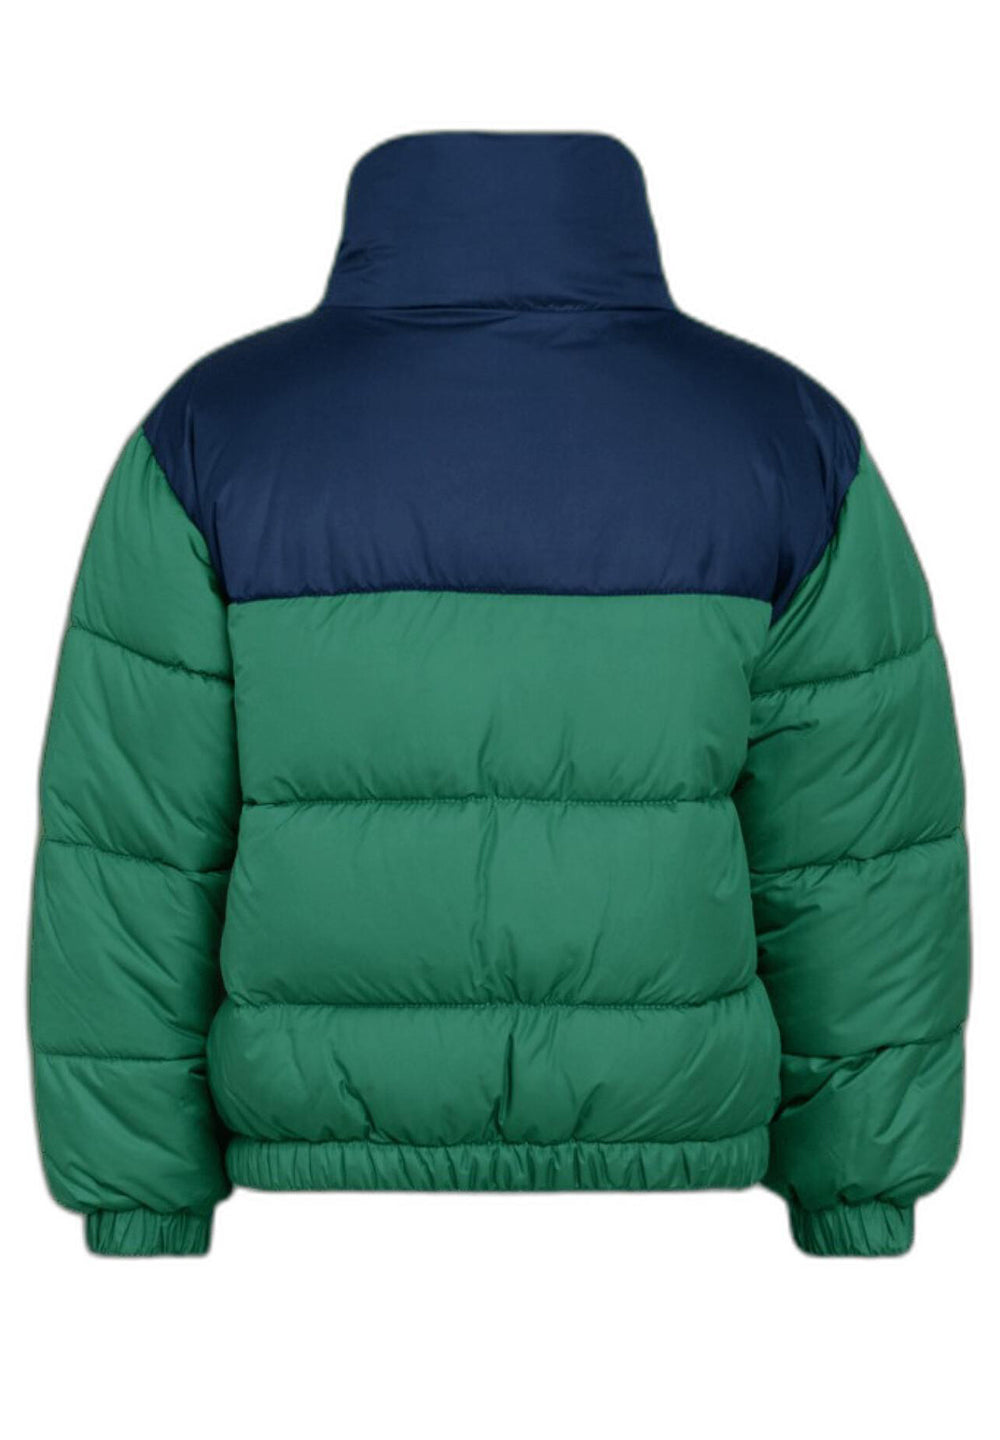 Green-blue jacket for children